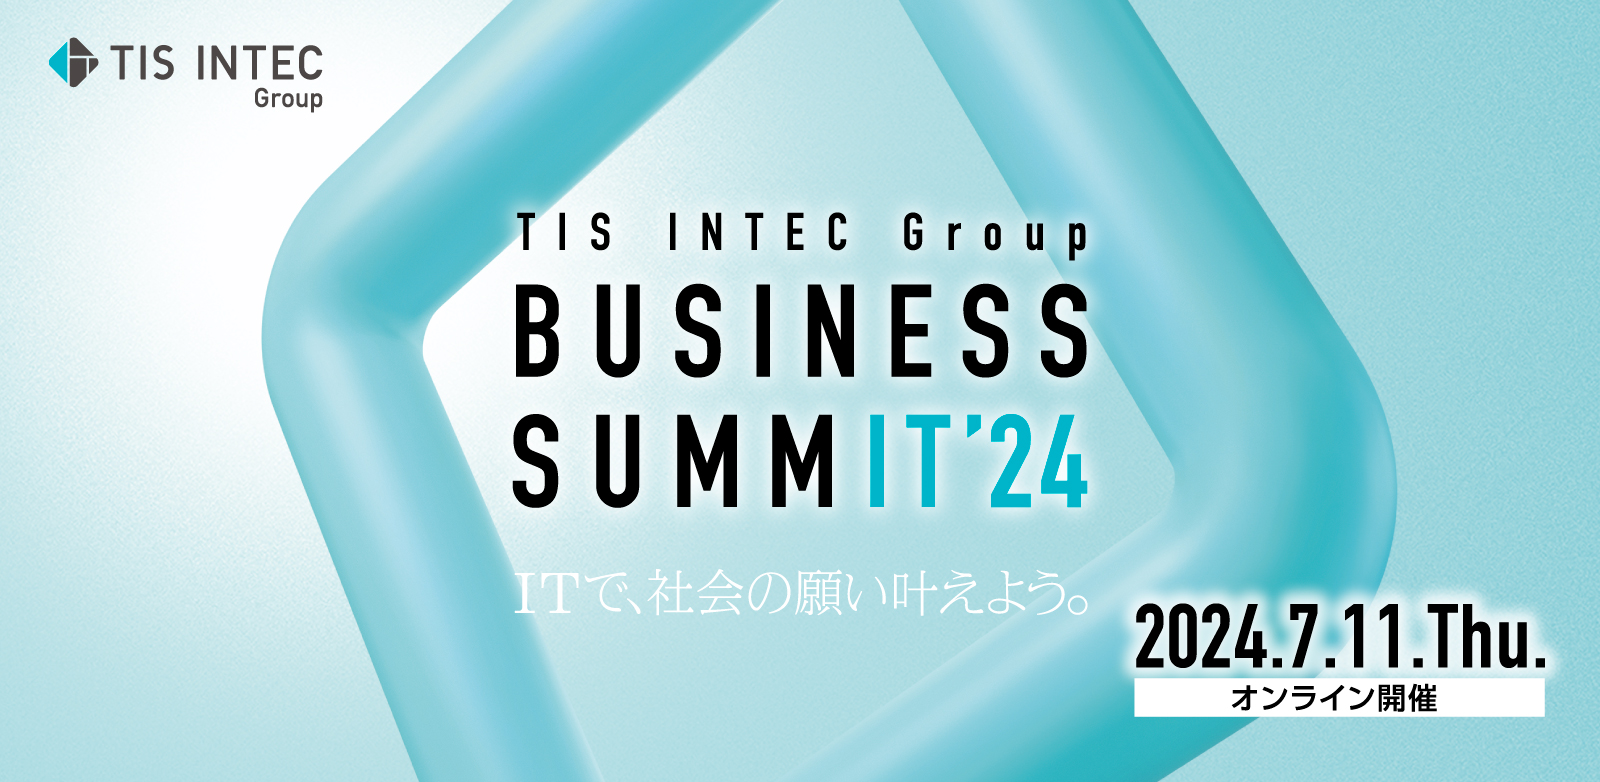 TIS INTEC Group BUSINESS SUMMIT'24